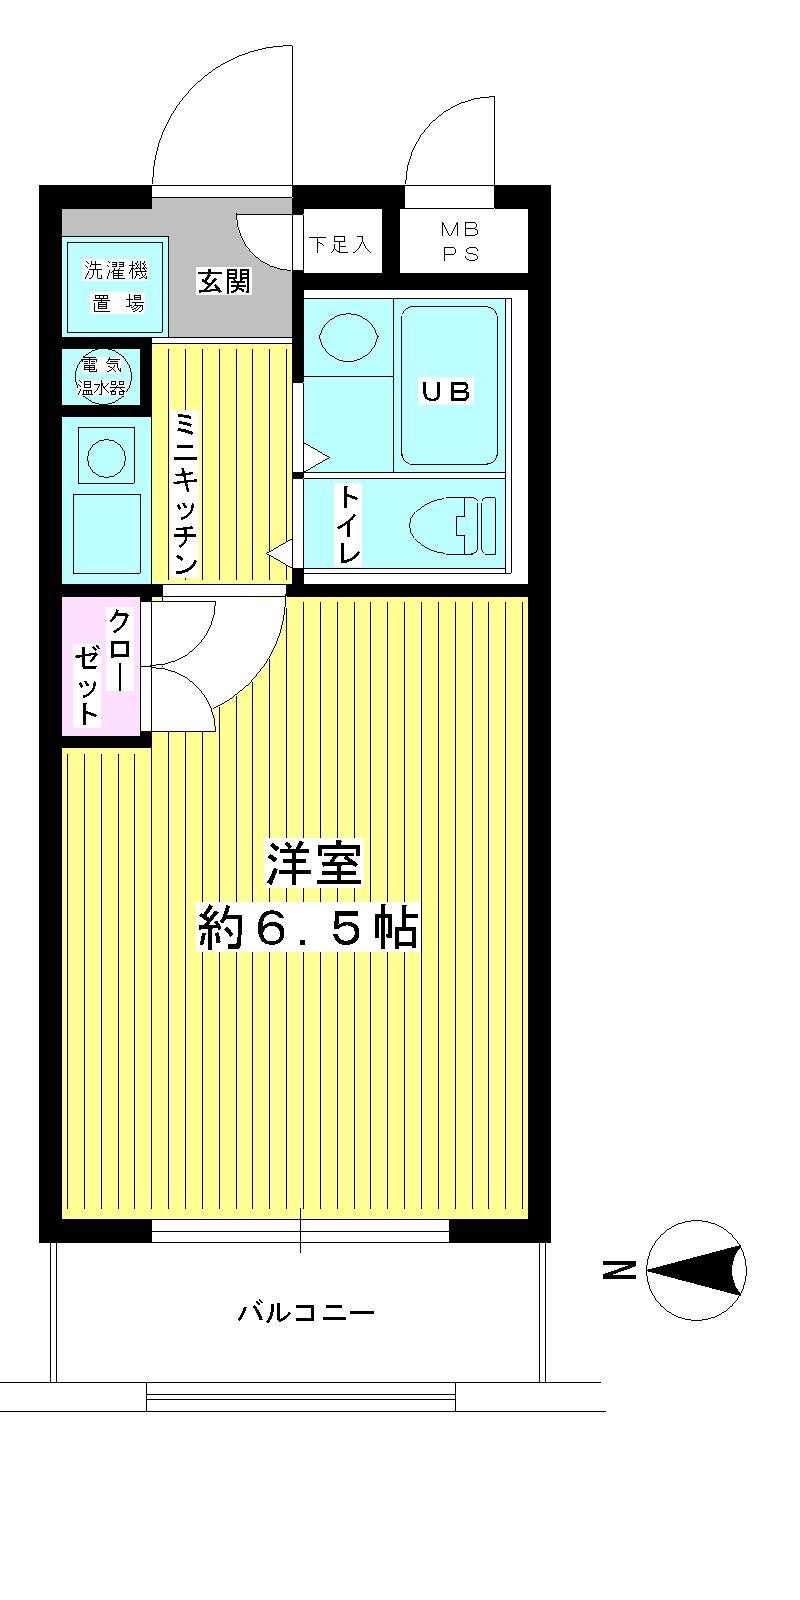 Floor plan. Price 5.5 million yen, Occupied area 17.38 sq m , Balcony area 2.85 sq m